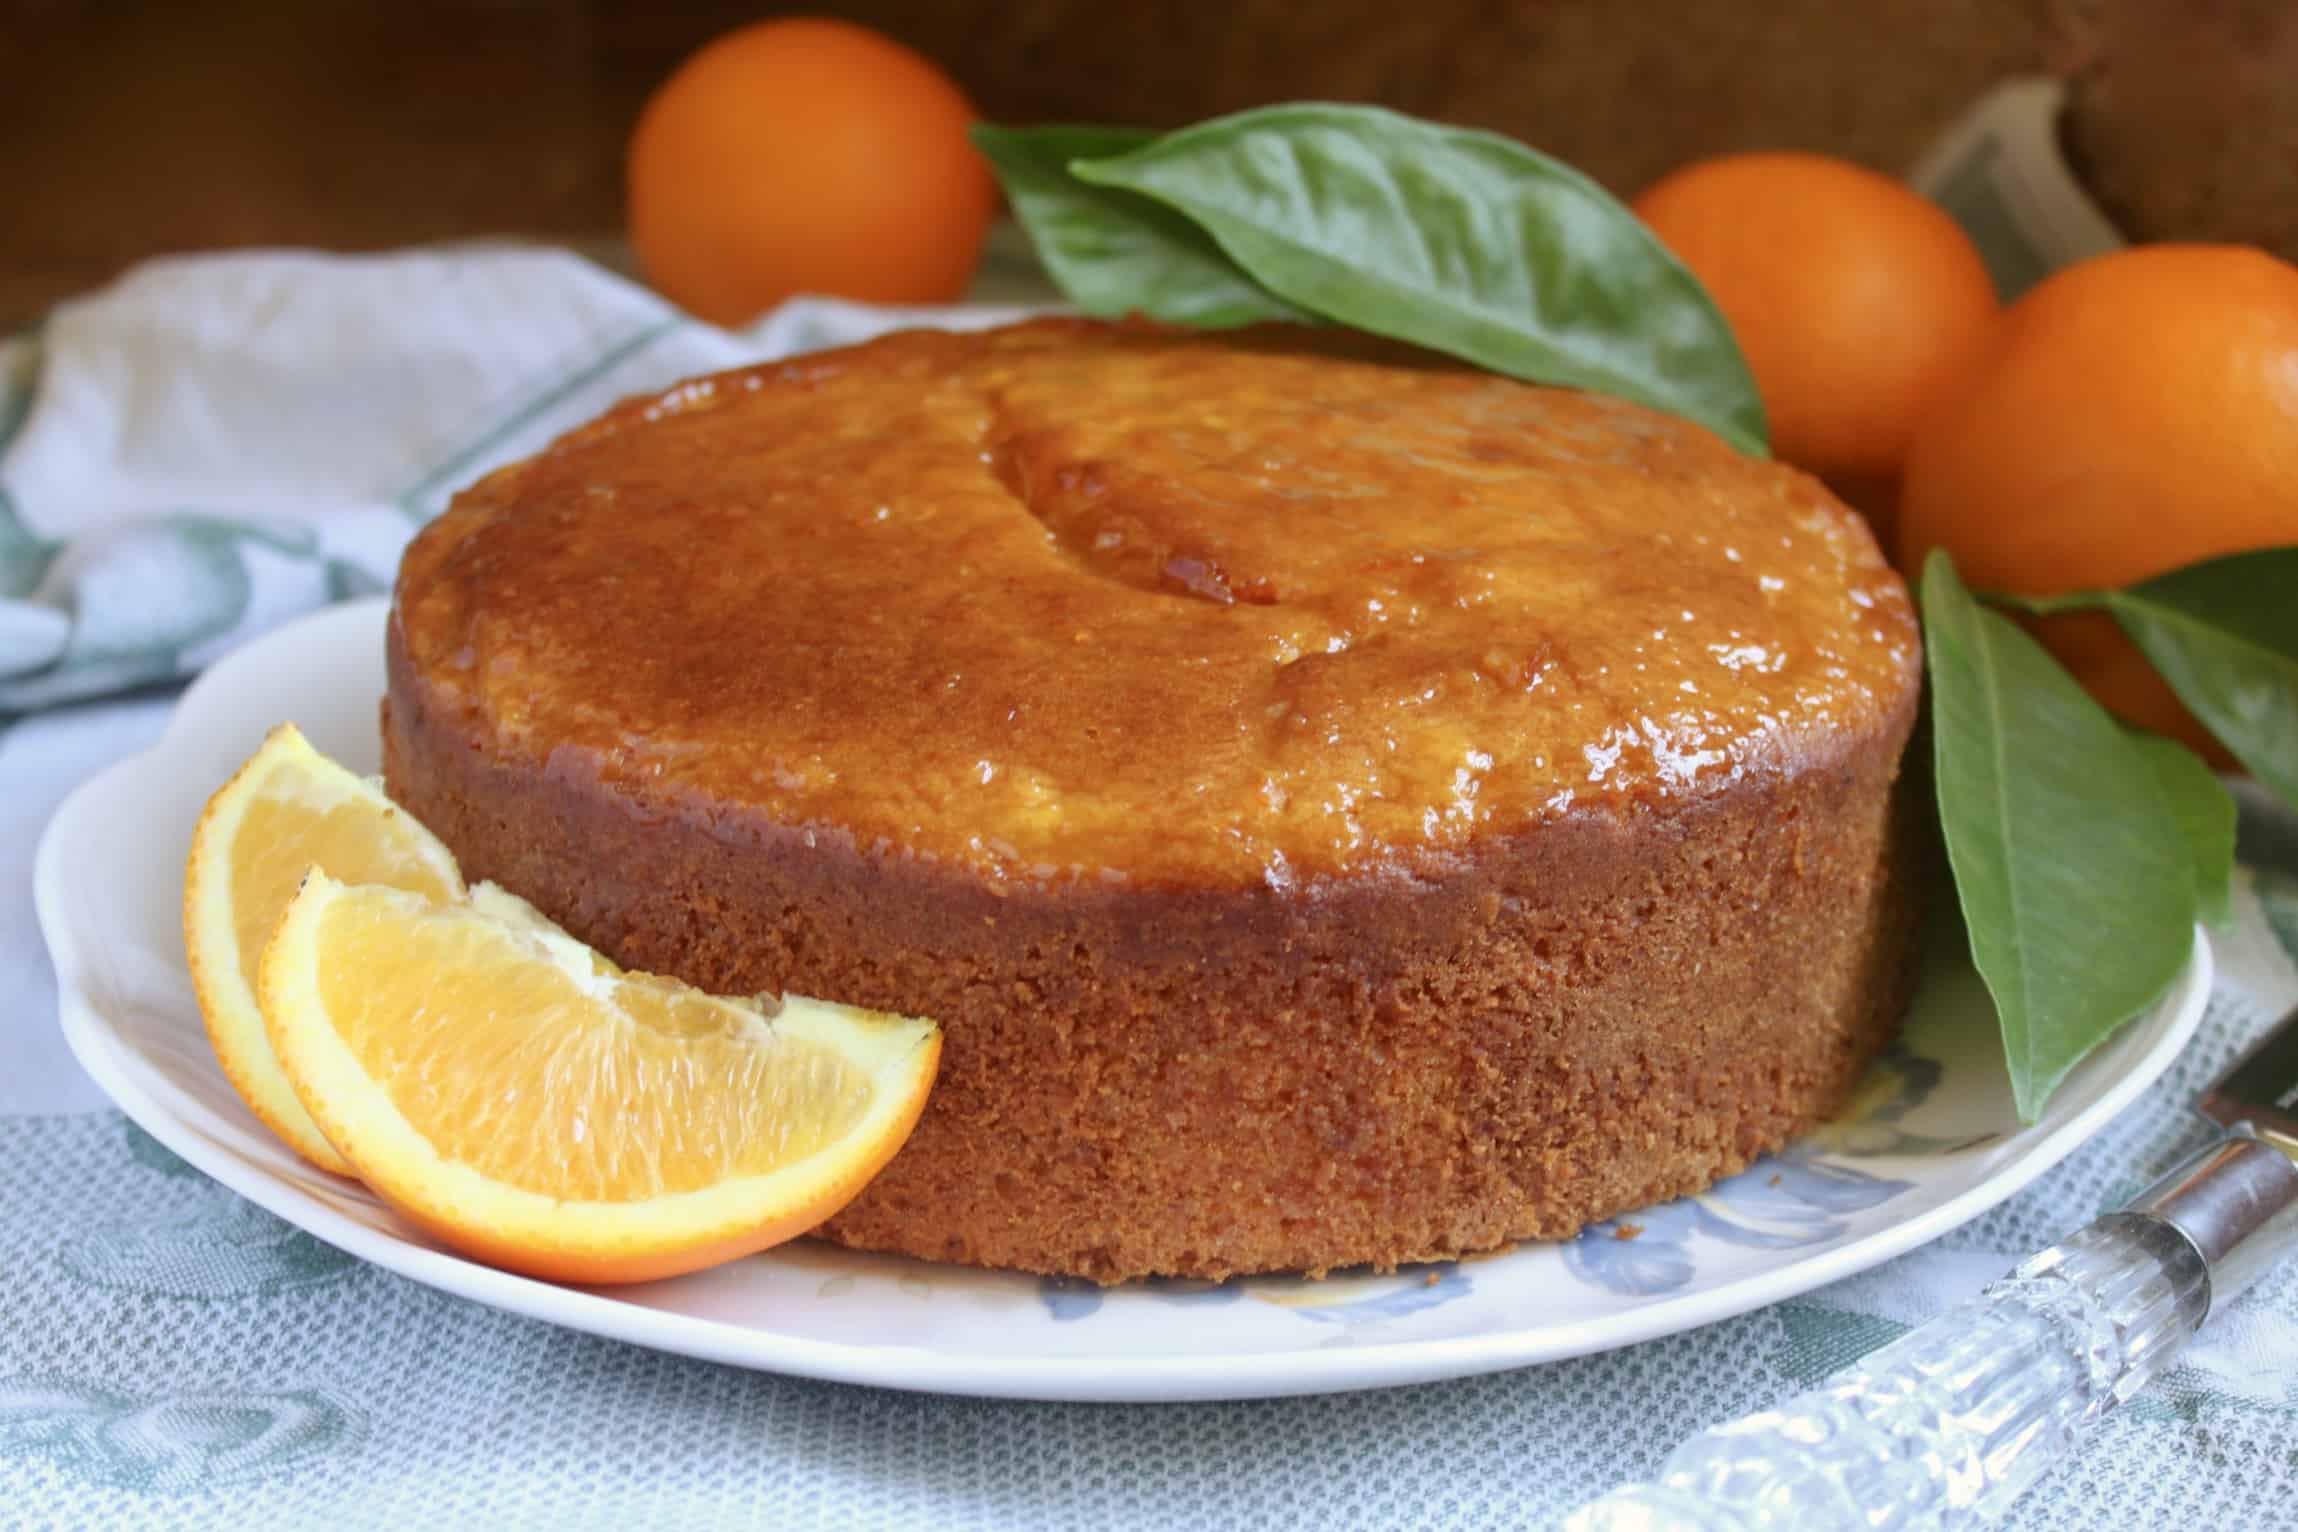 Sicilian Whole Orange cake on a plate with oranges